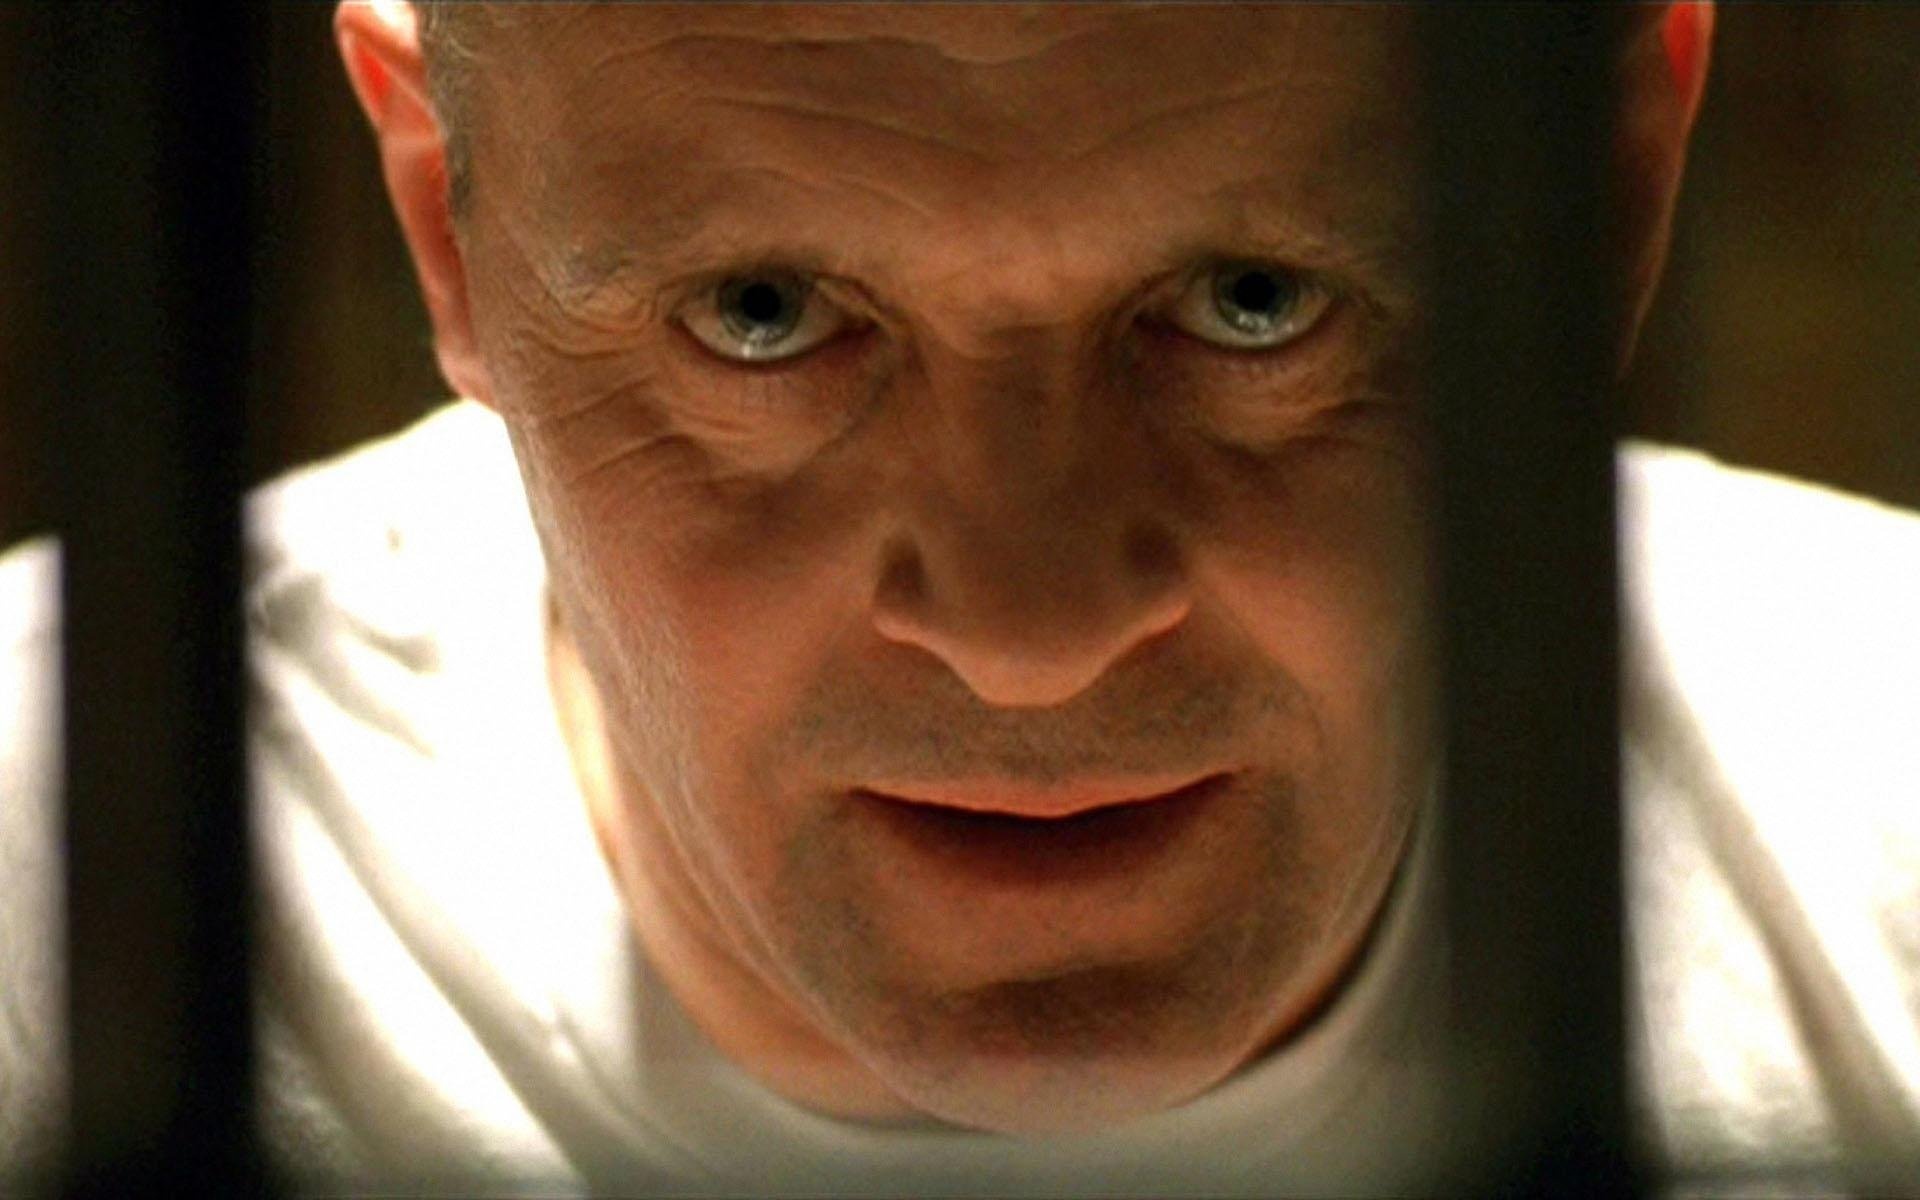 Hannibal Lecter wallpaper, Captivating movie character, Dark psychological thriller, Serial killer fascination, 1920x1200 HD Desktop